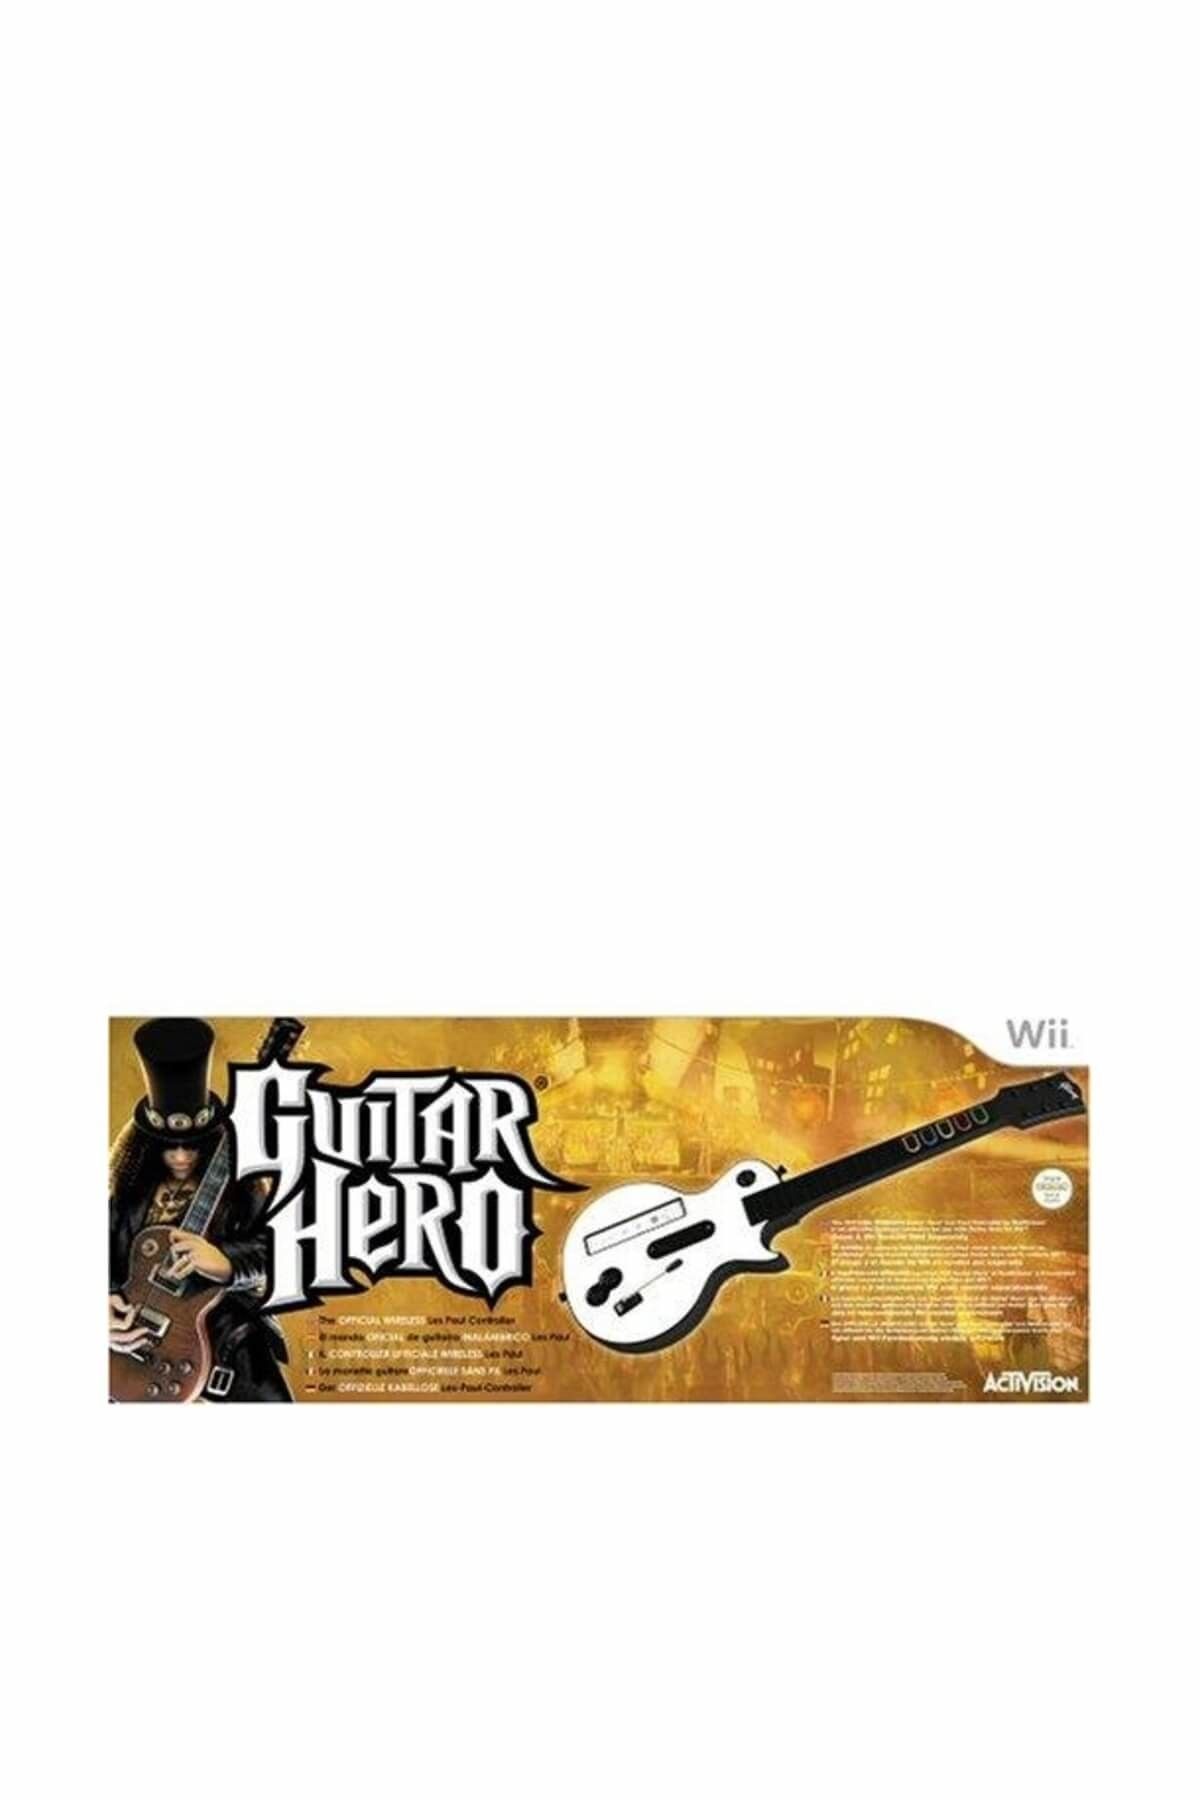 Nintendo Wii Guitar Hero 3 Gitari - Wii De Calisir Oyun Yoktur